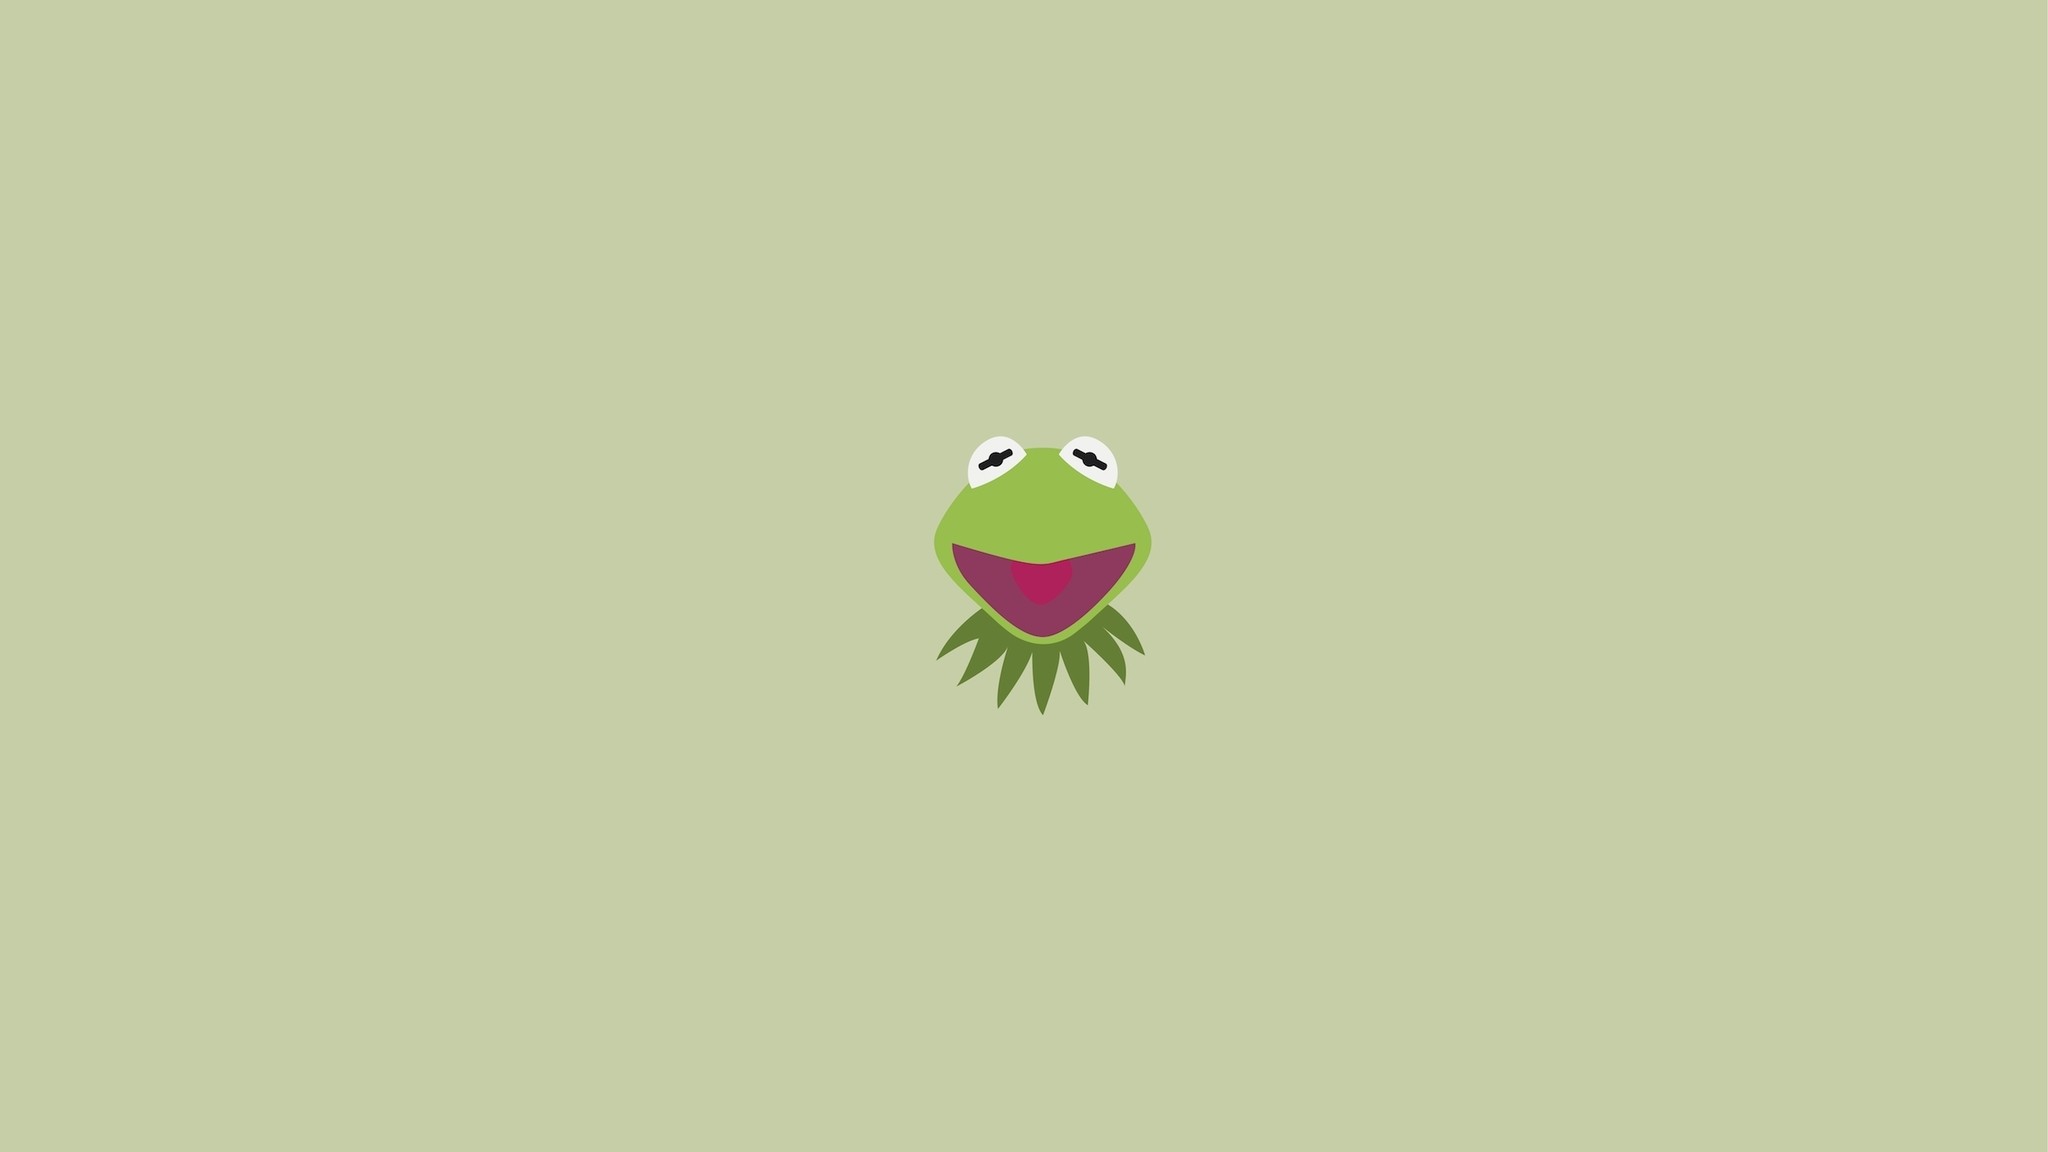 Description: Download Minimalistic Kermit The Frog Artwork 2 Wallpaper Desktop Background In HD & Widescreen Resolution